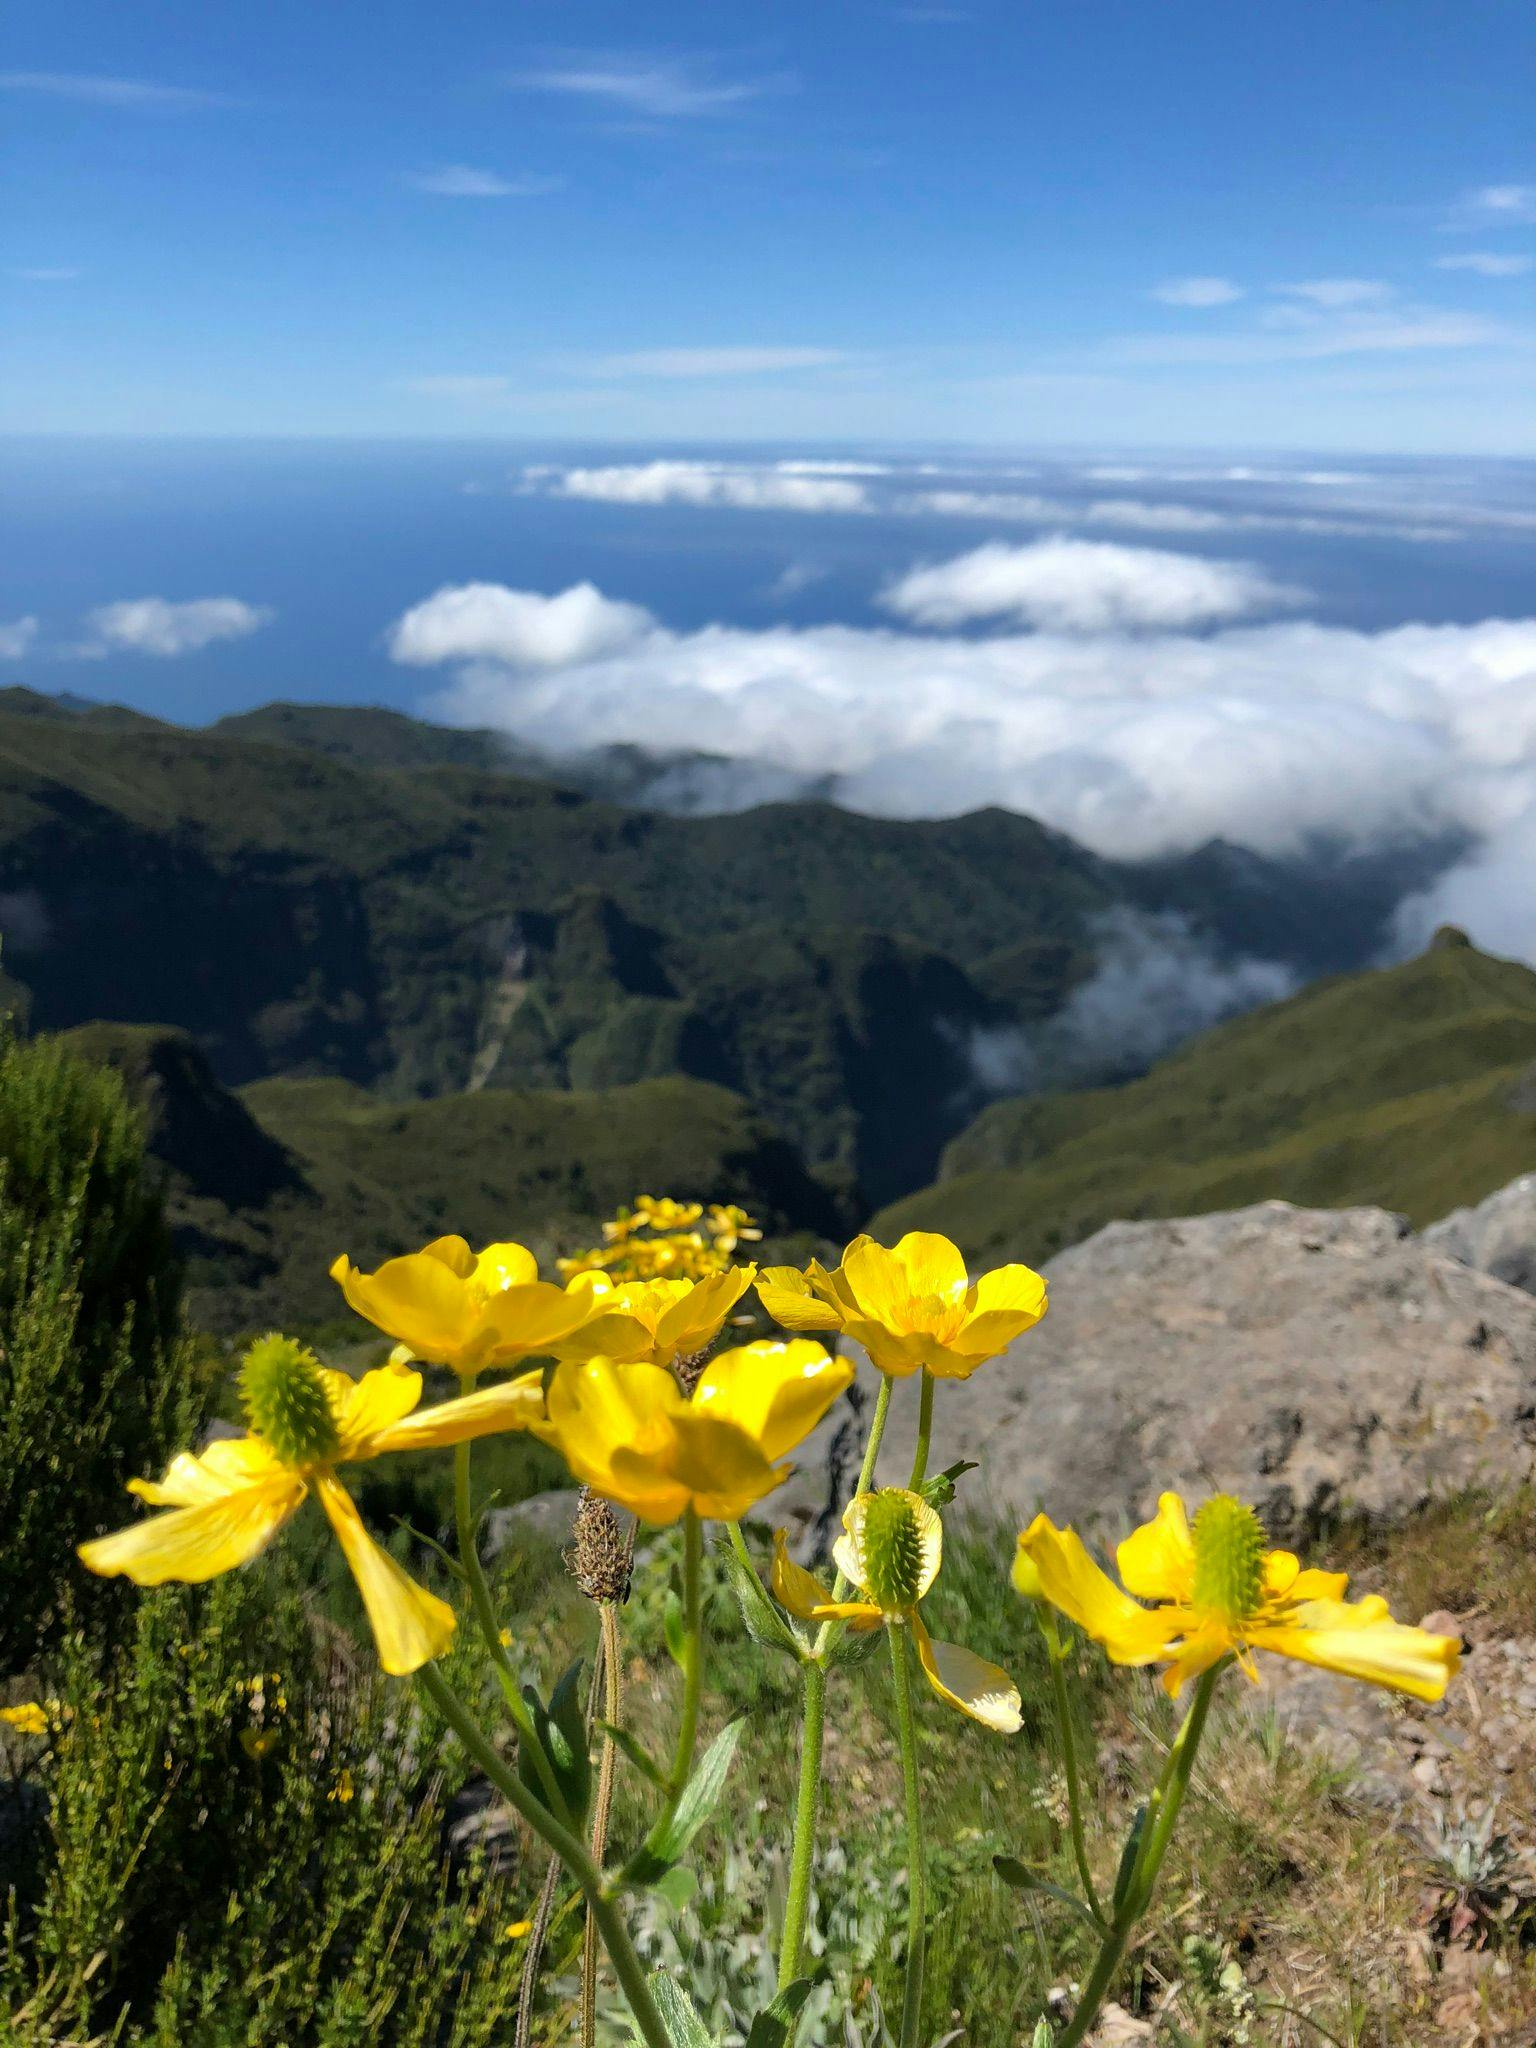 Image 1 of Hike from Pico do Areiro to Pico Ruivo.